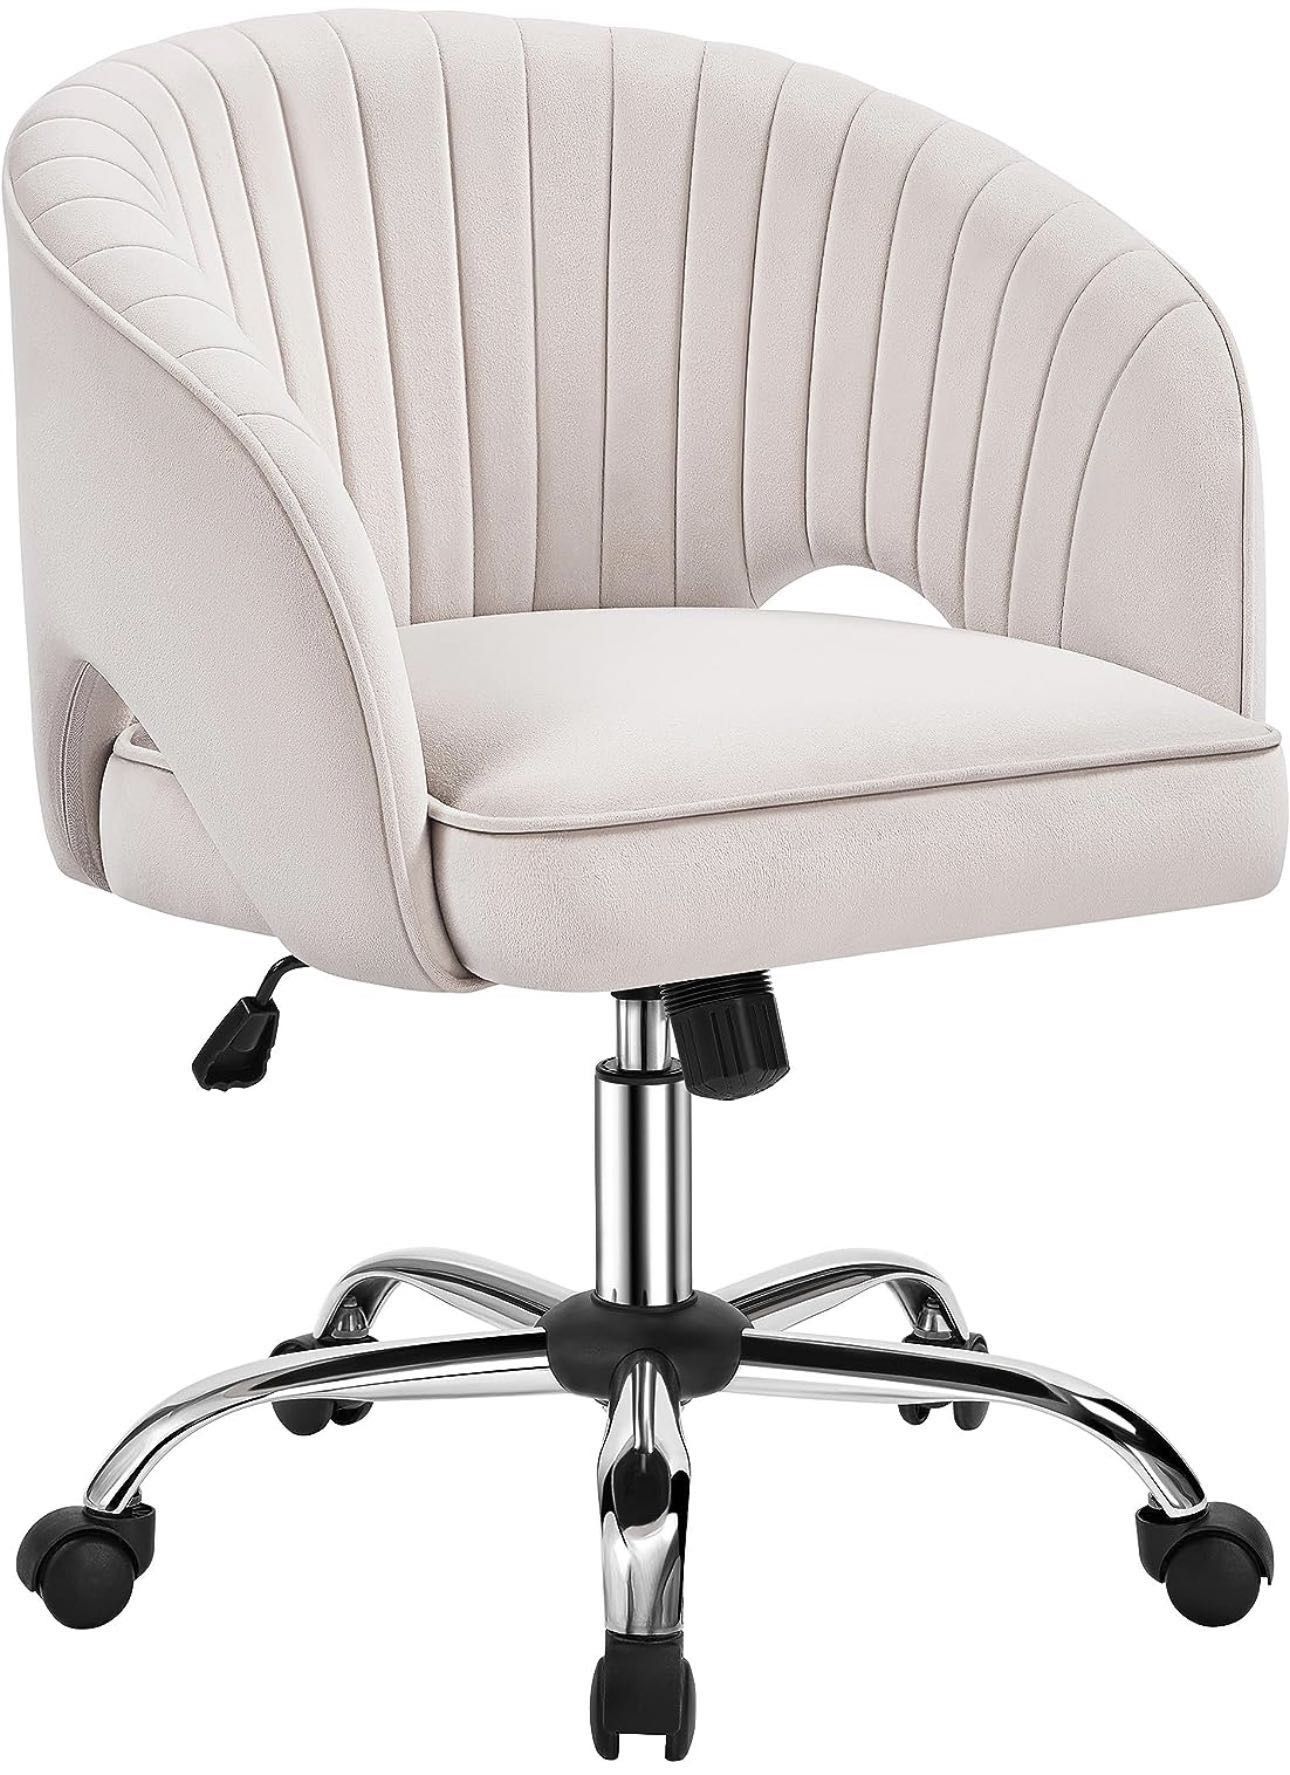 Home Office Chair Velvet Desk Chair, Upholstered Modern Swivel Chair with Tufted Barrel Back, Rolling Wheels for Office,Study, Vanity,Bedroom Cream 59